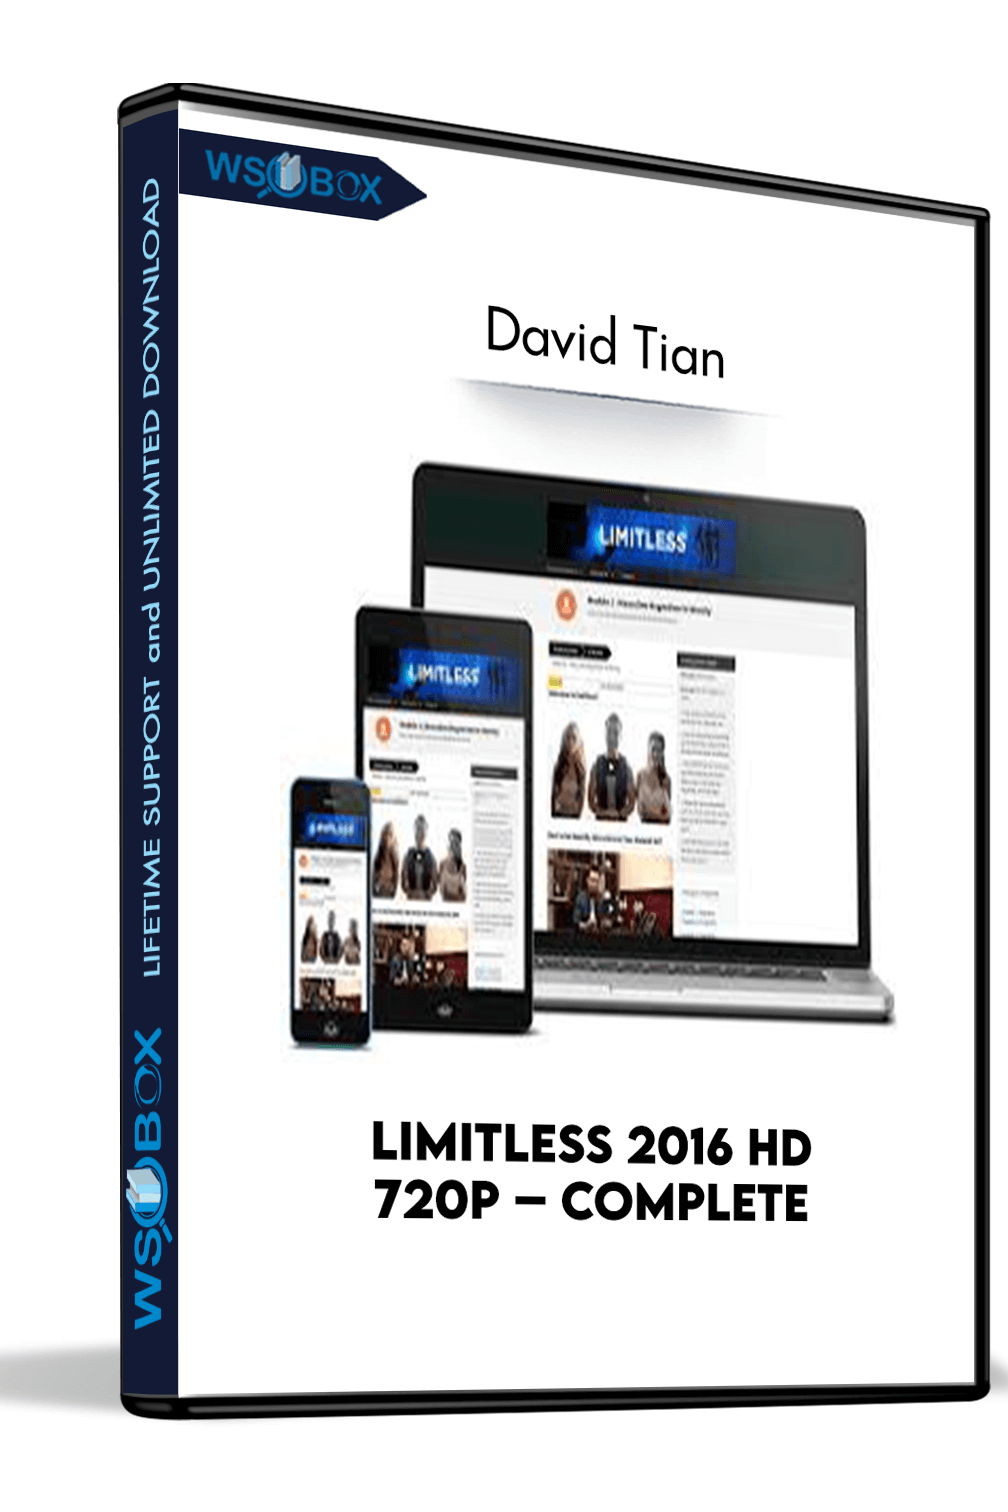 limitless-2016-hd-720p-complete-david-tian